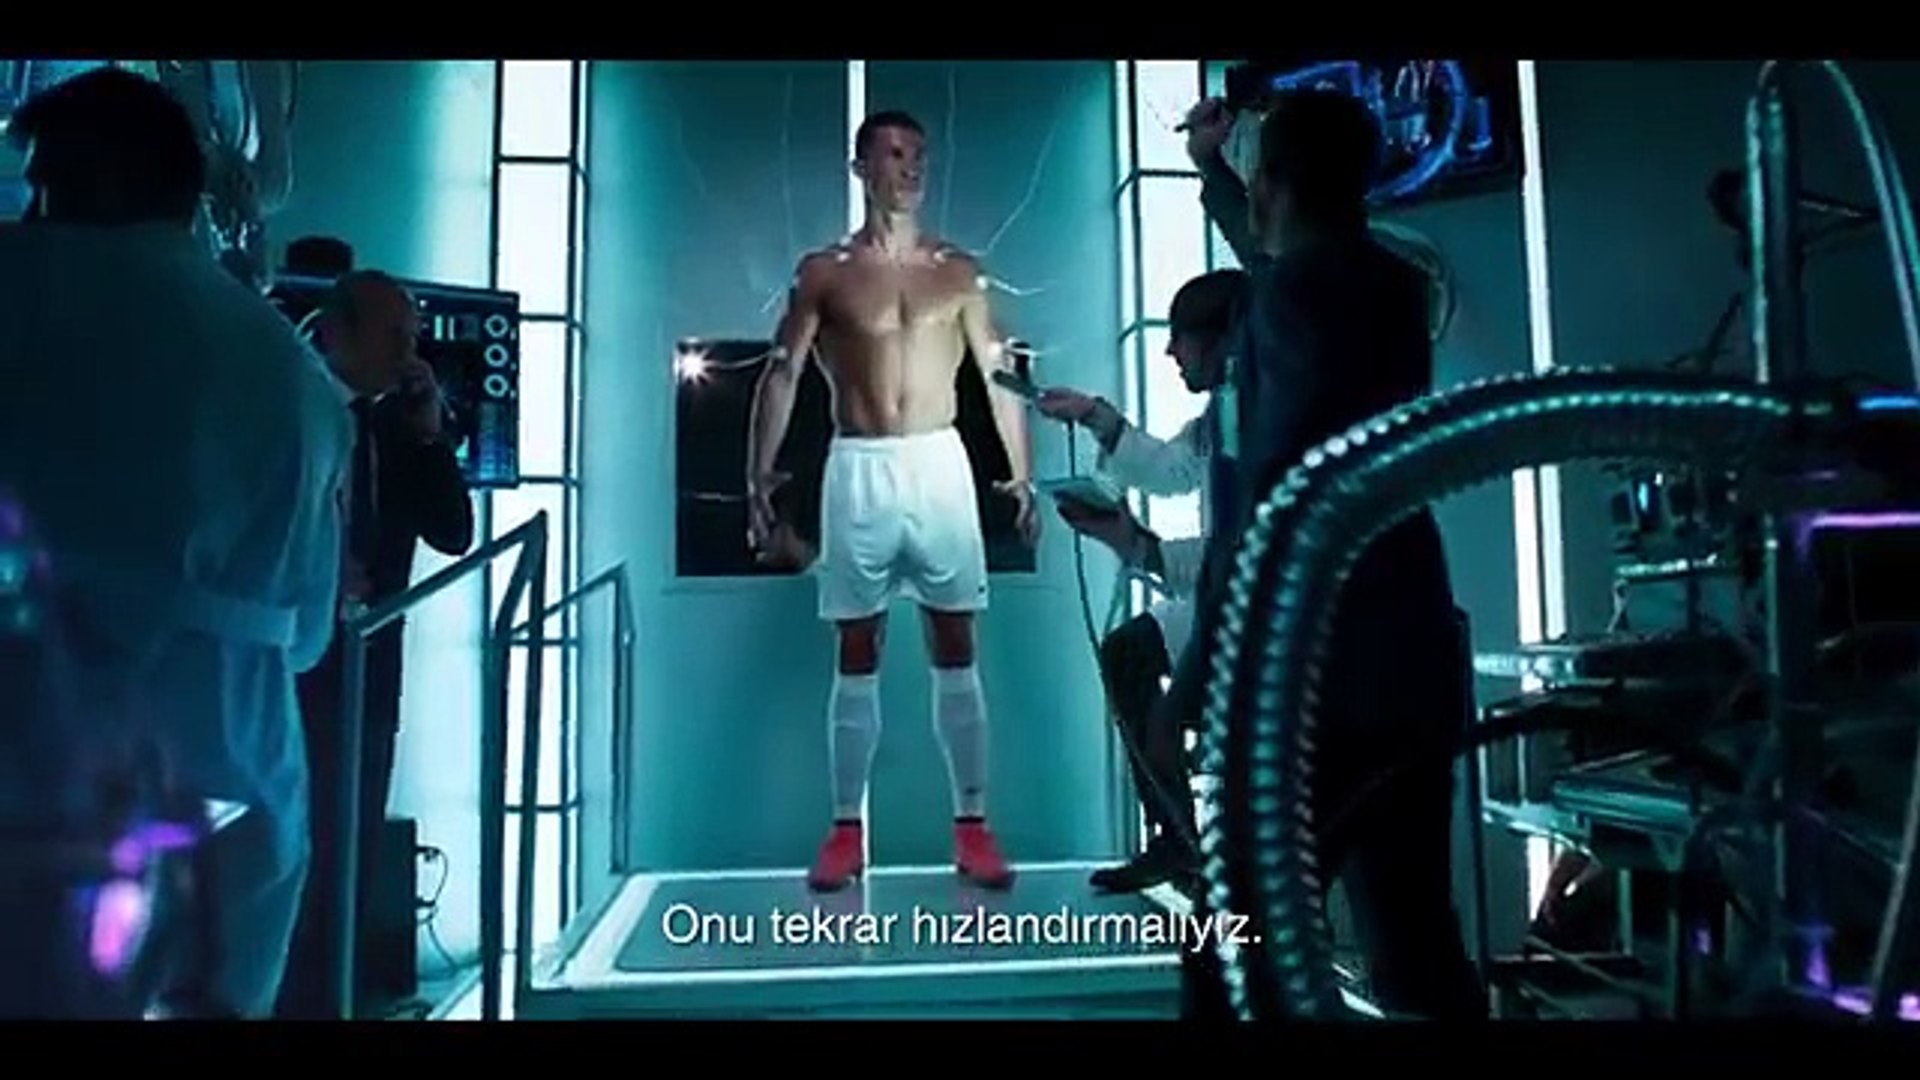 Cristiano Ronaldo Türk Telekom Reklamı Yayınlandı - Dailymotion Video